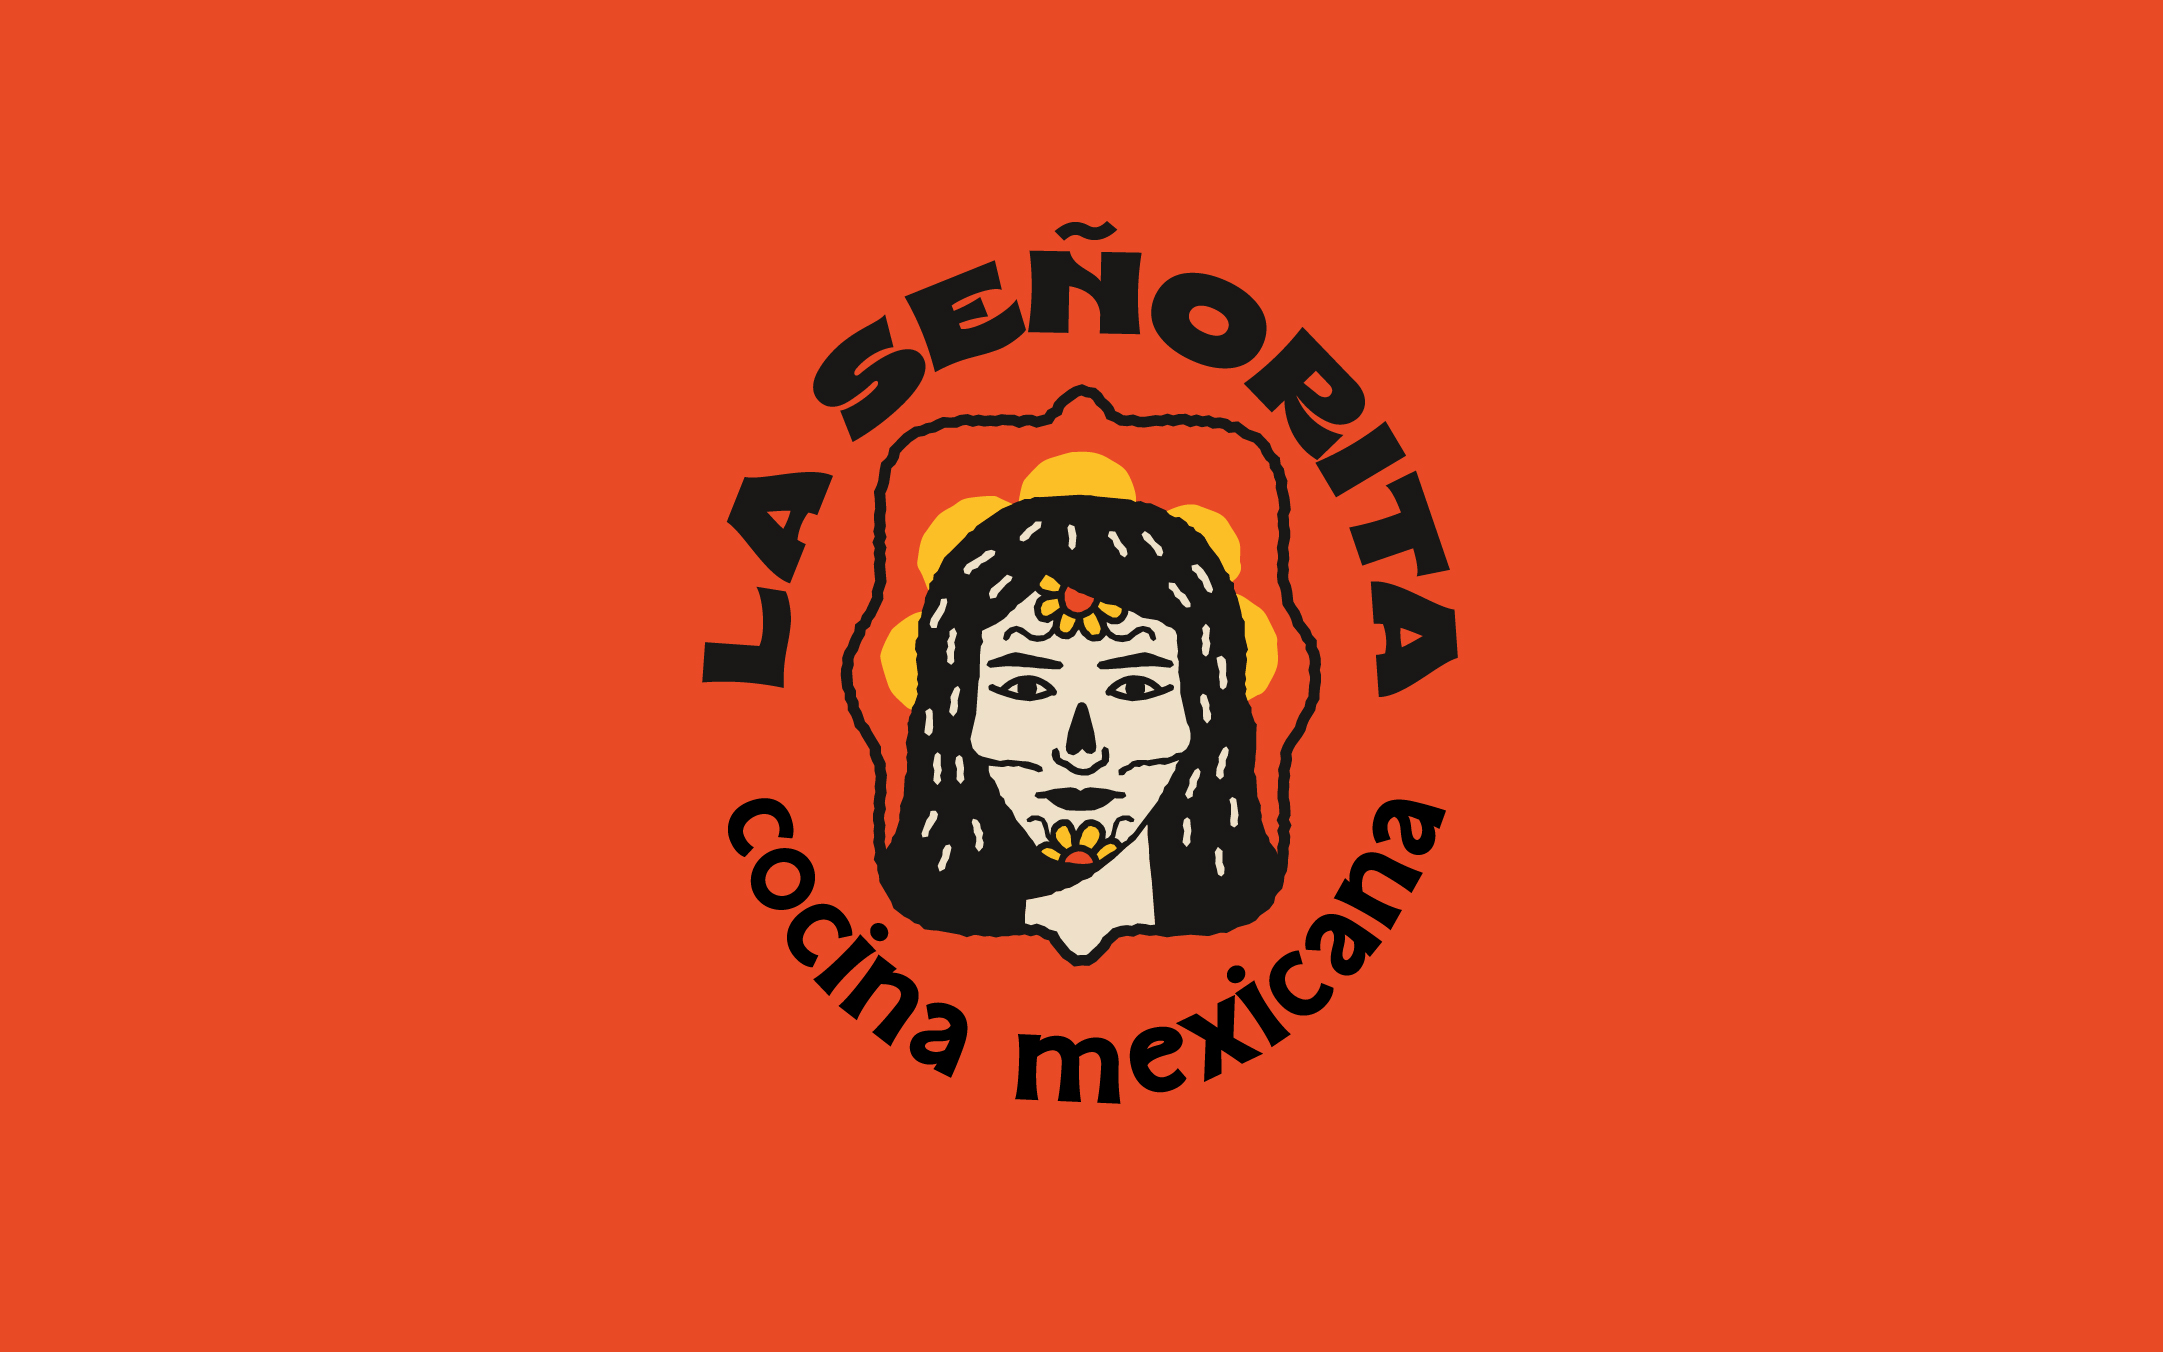 La Señorita Cocina Mexicana Restaurant Branding by Távola Design